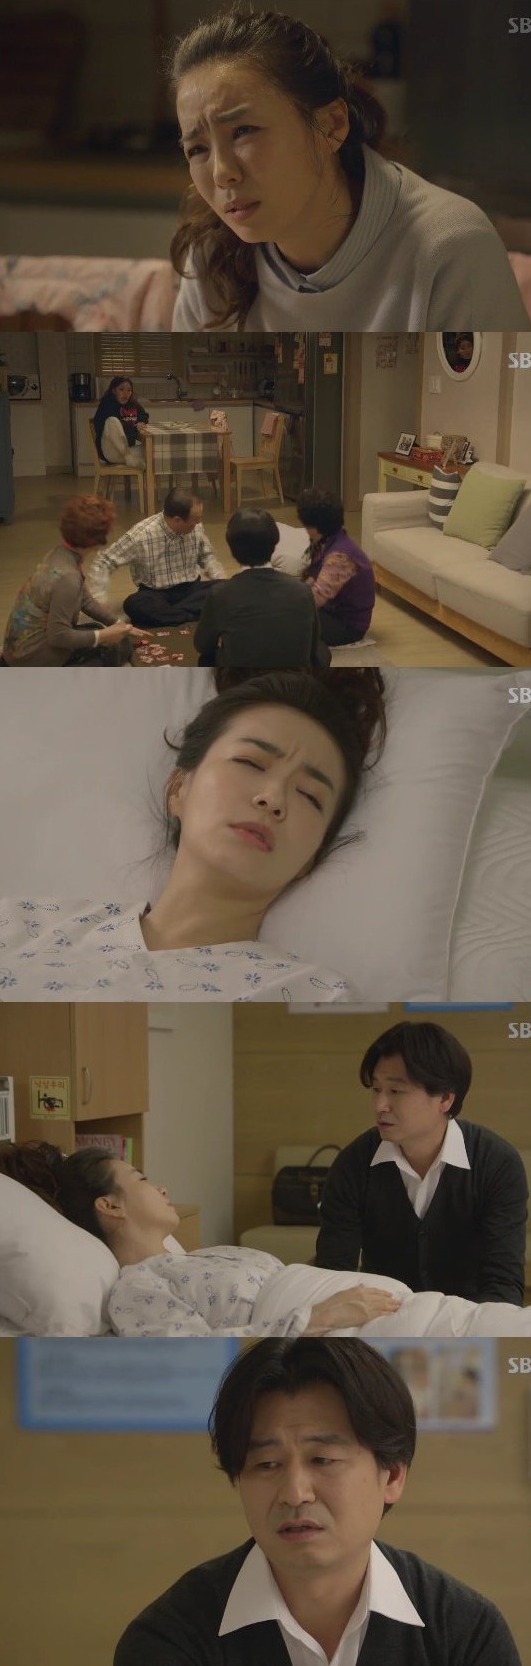 episode 11 captures for the Korean drama 'Strong Family'